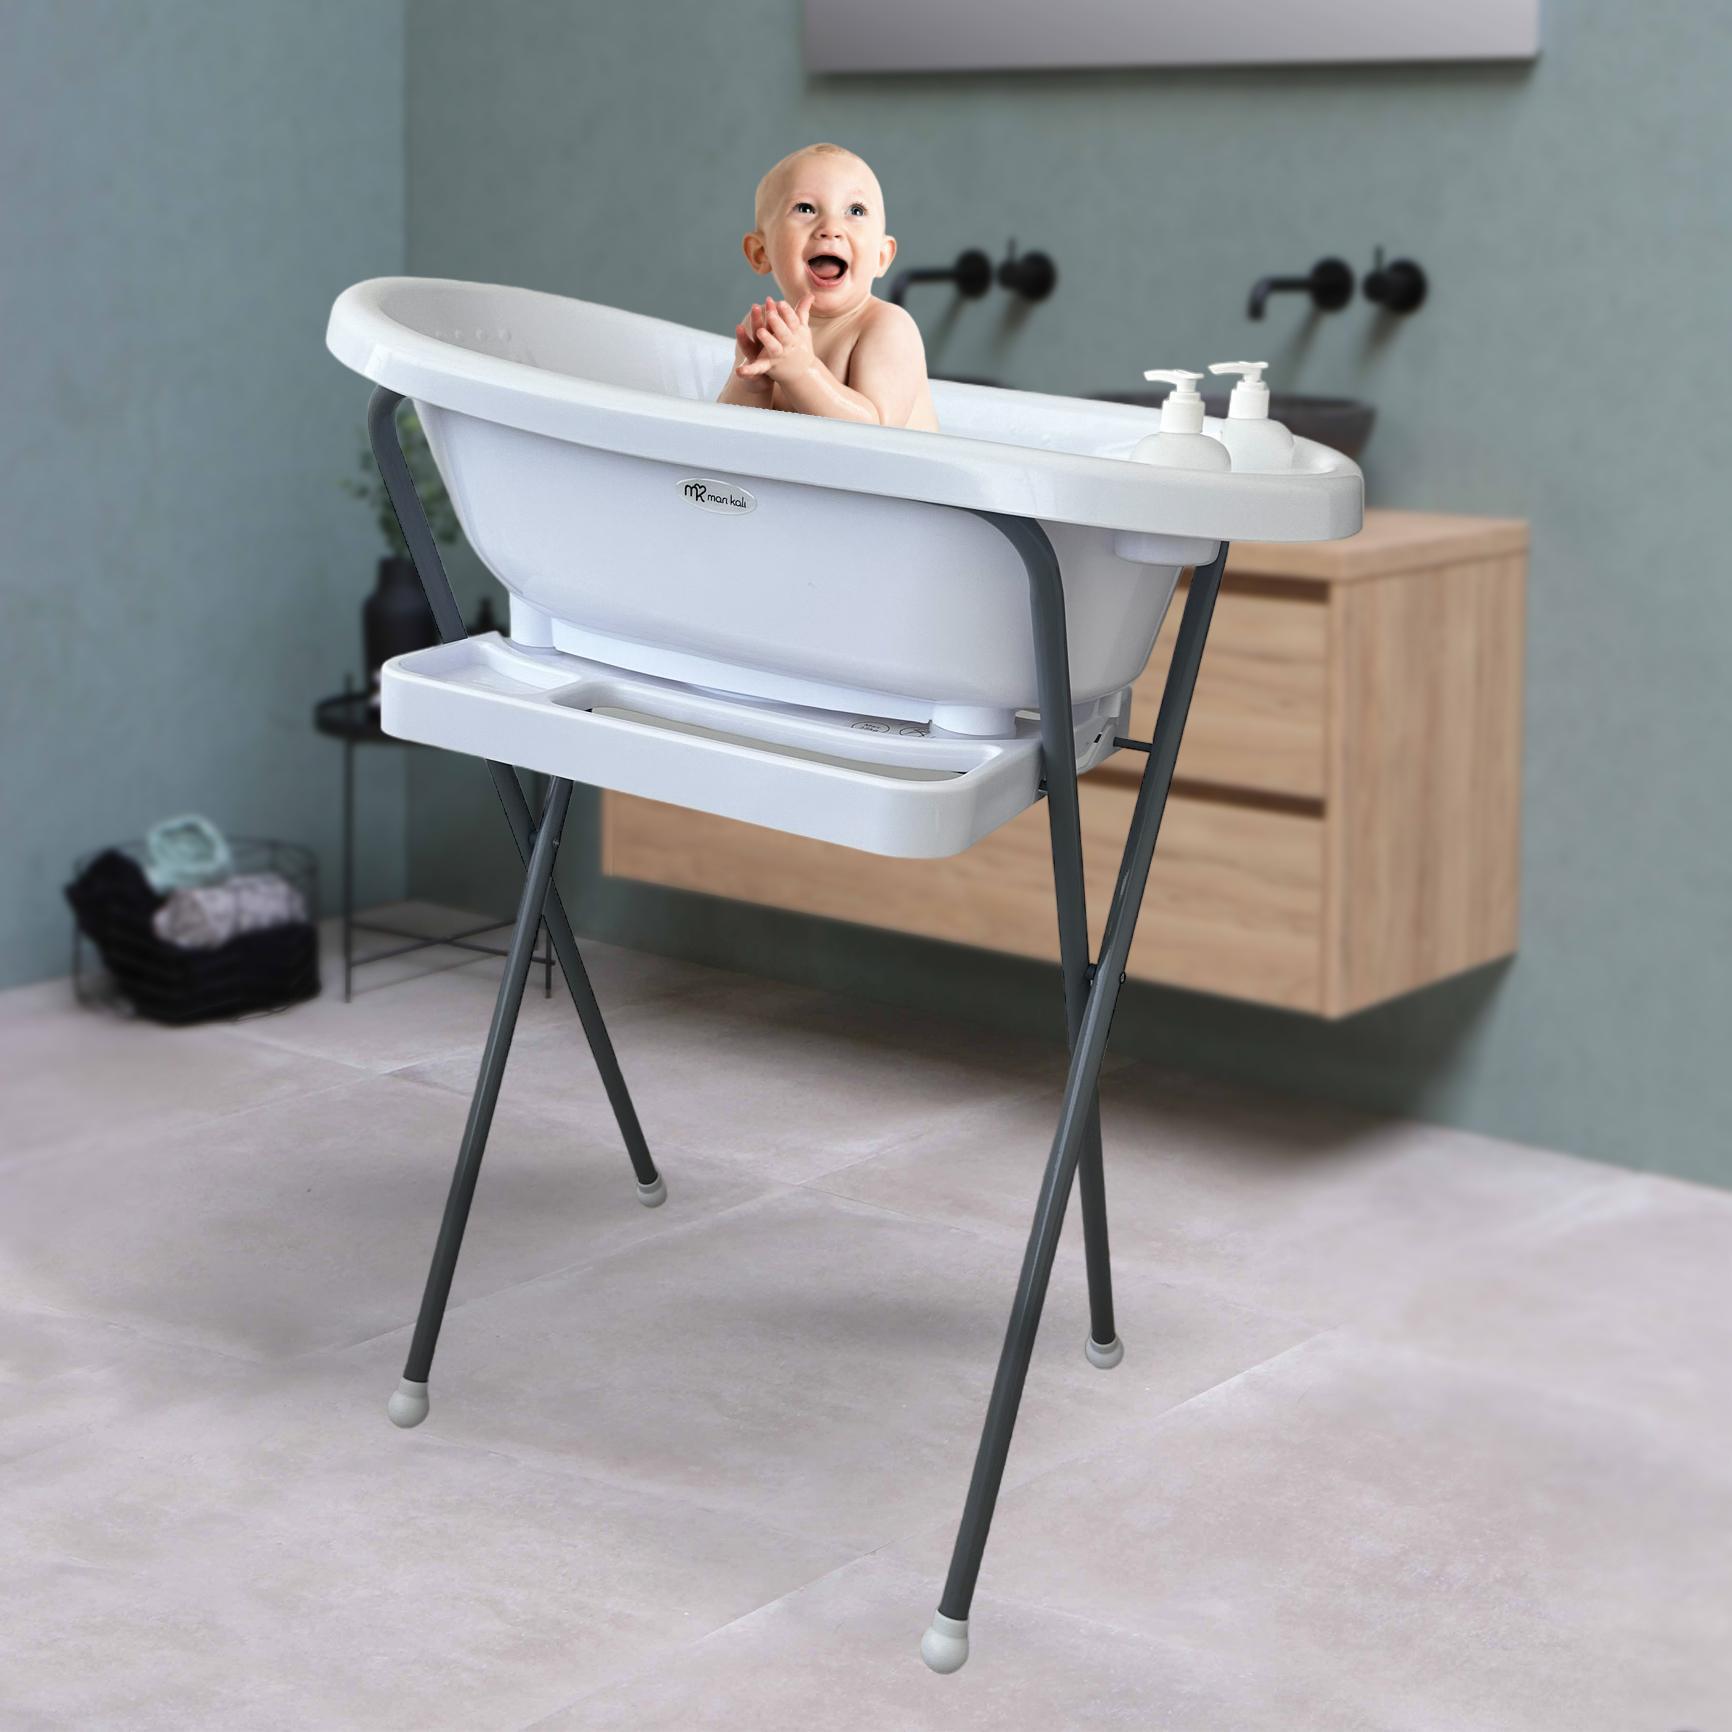 mk Collection - Mari Kali Aqua Baby Bath Tub & Stand - Splash and Snuggle! - Mari Kali Stores Cyprus